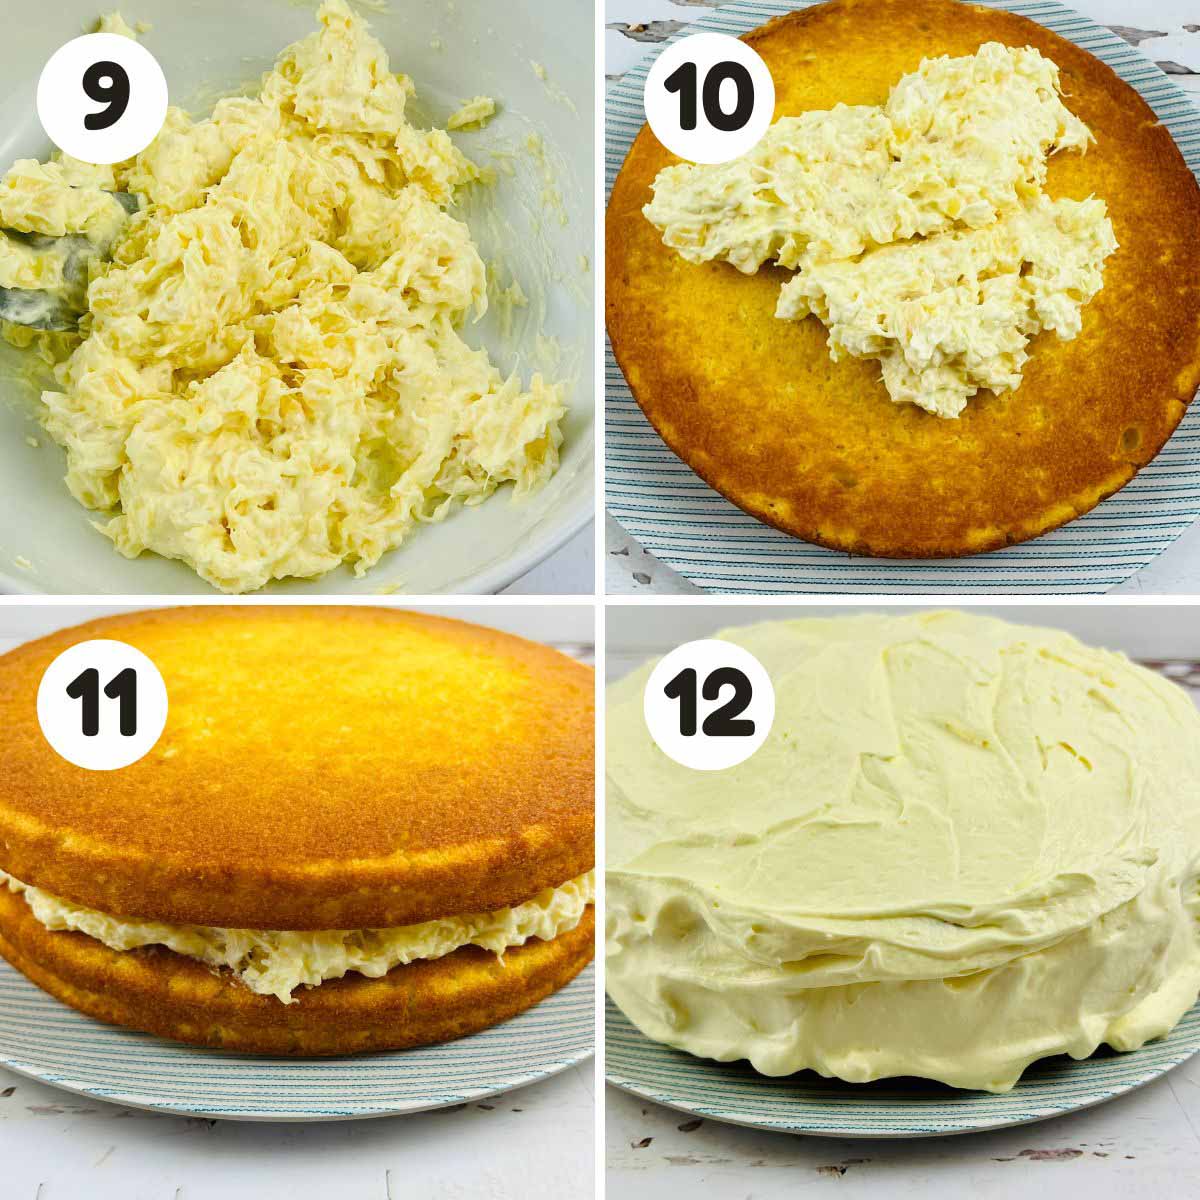 Steps to assemble the lemon cake.